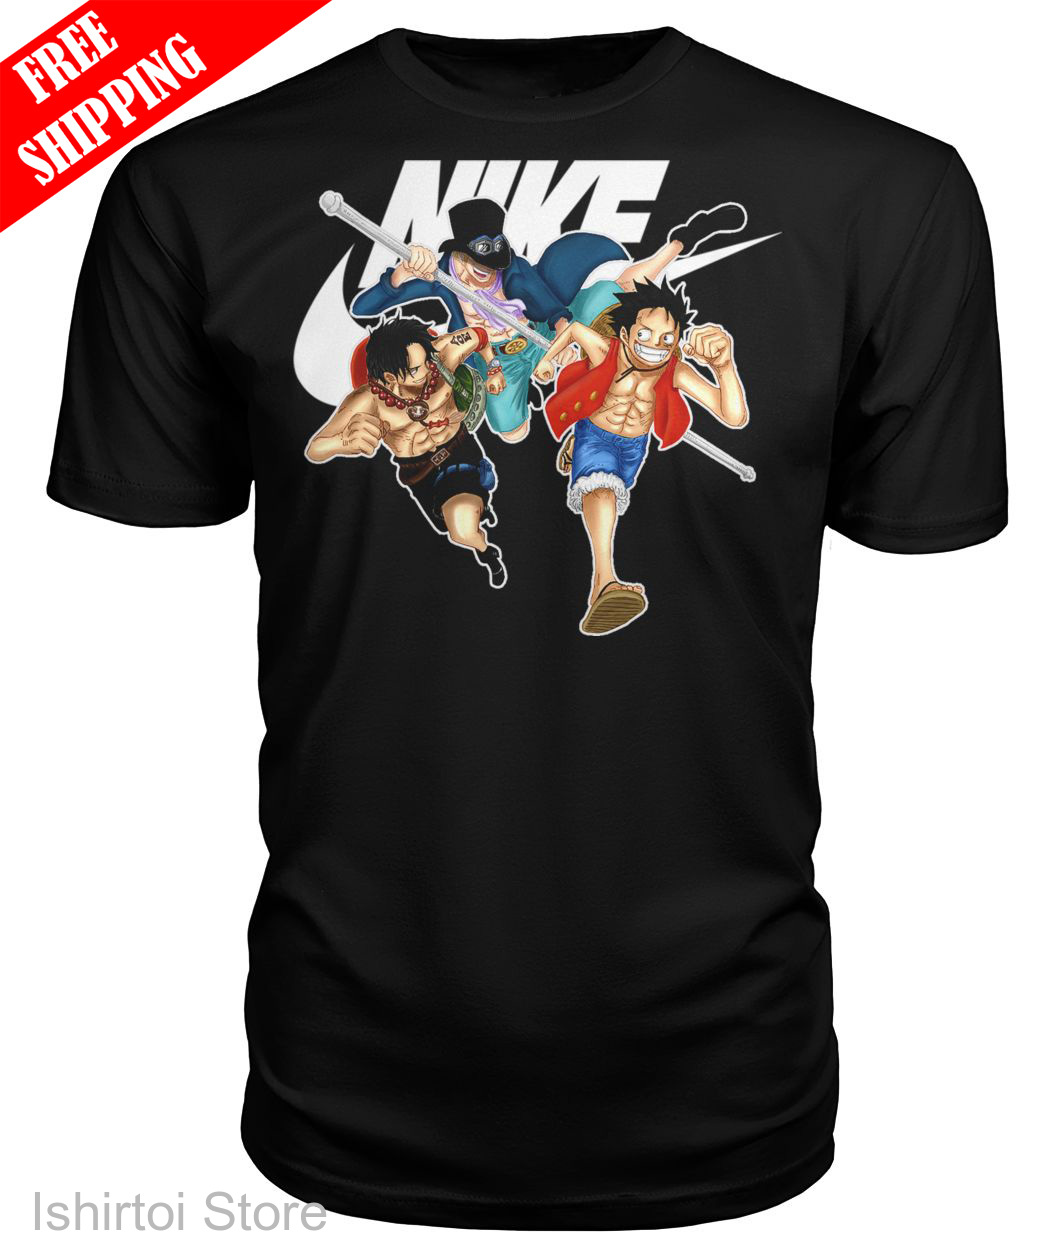 One Piece Ace Sabo Luffy Nike shirt